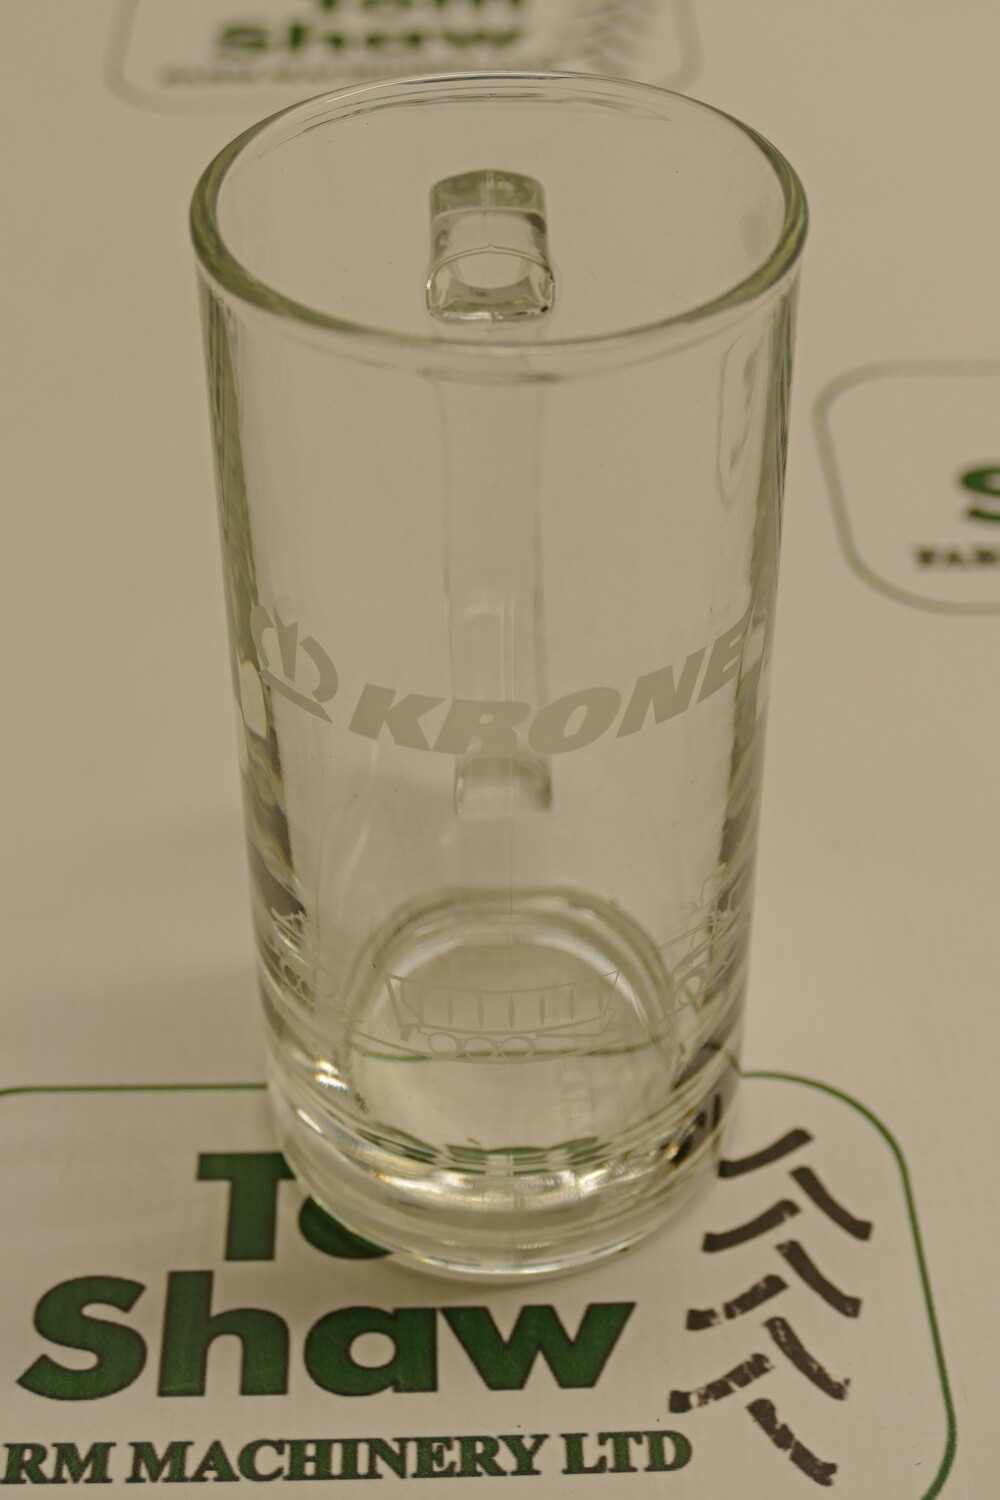 Krone Beer Glass